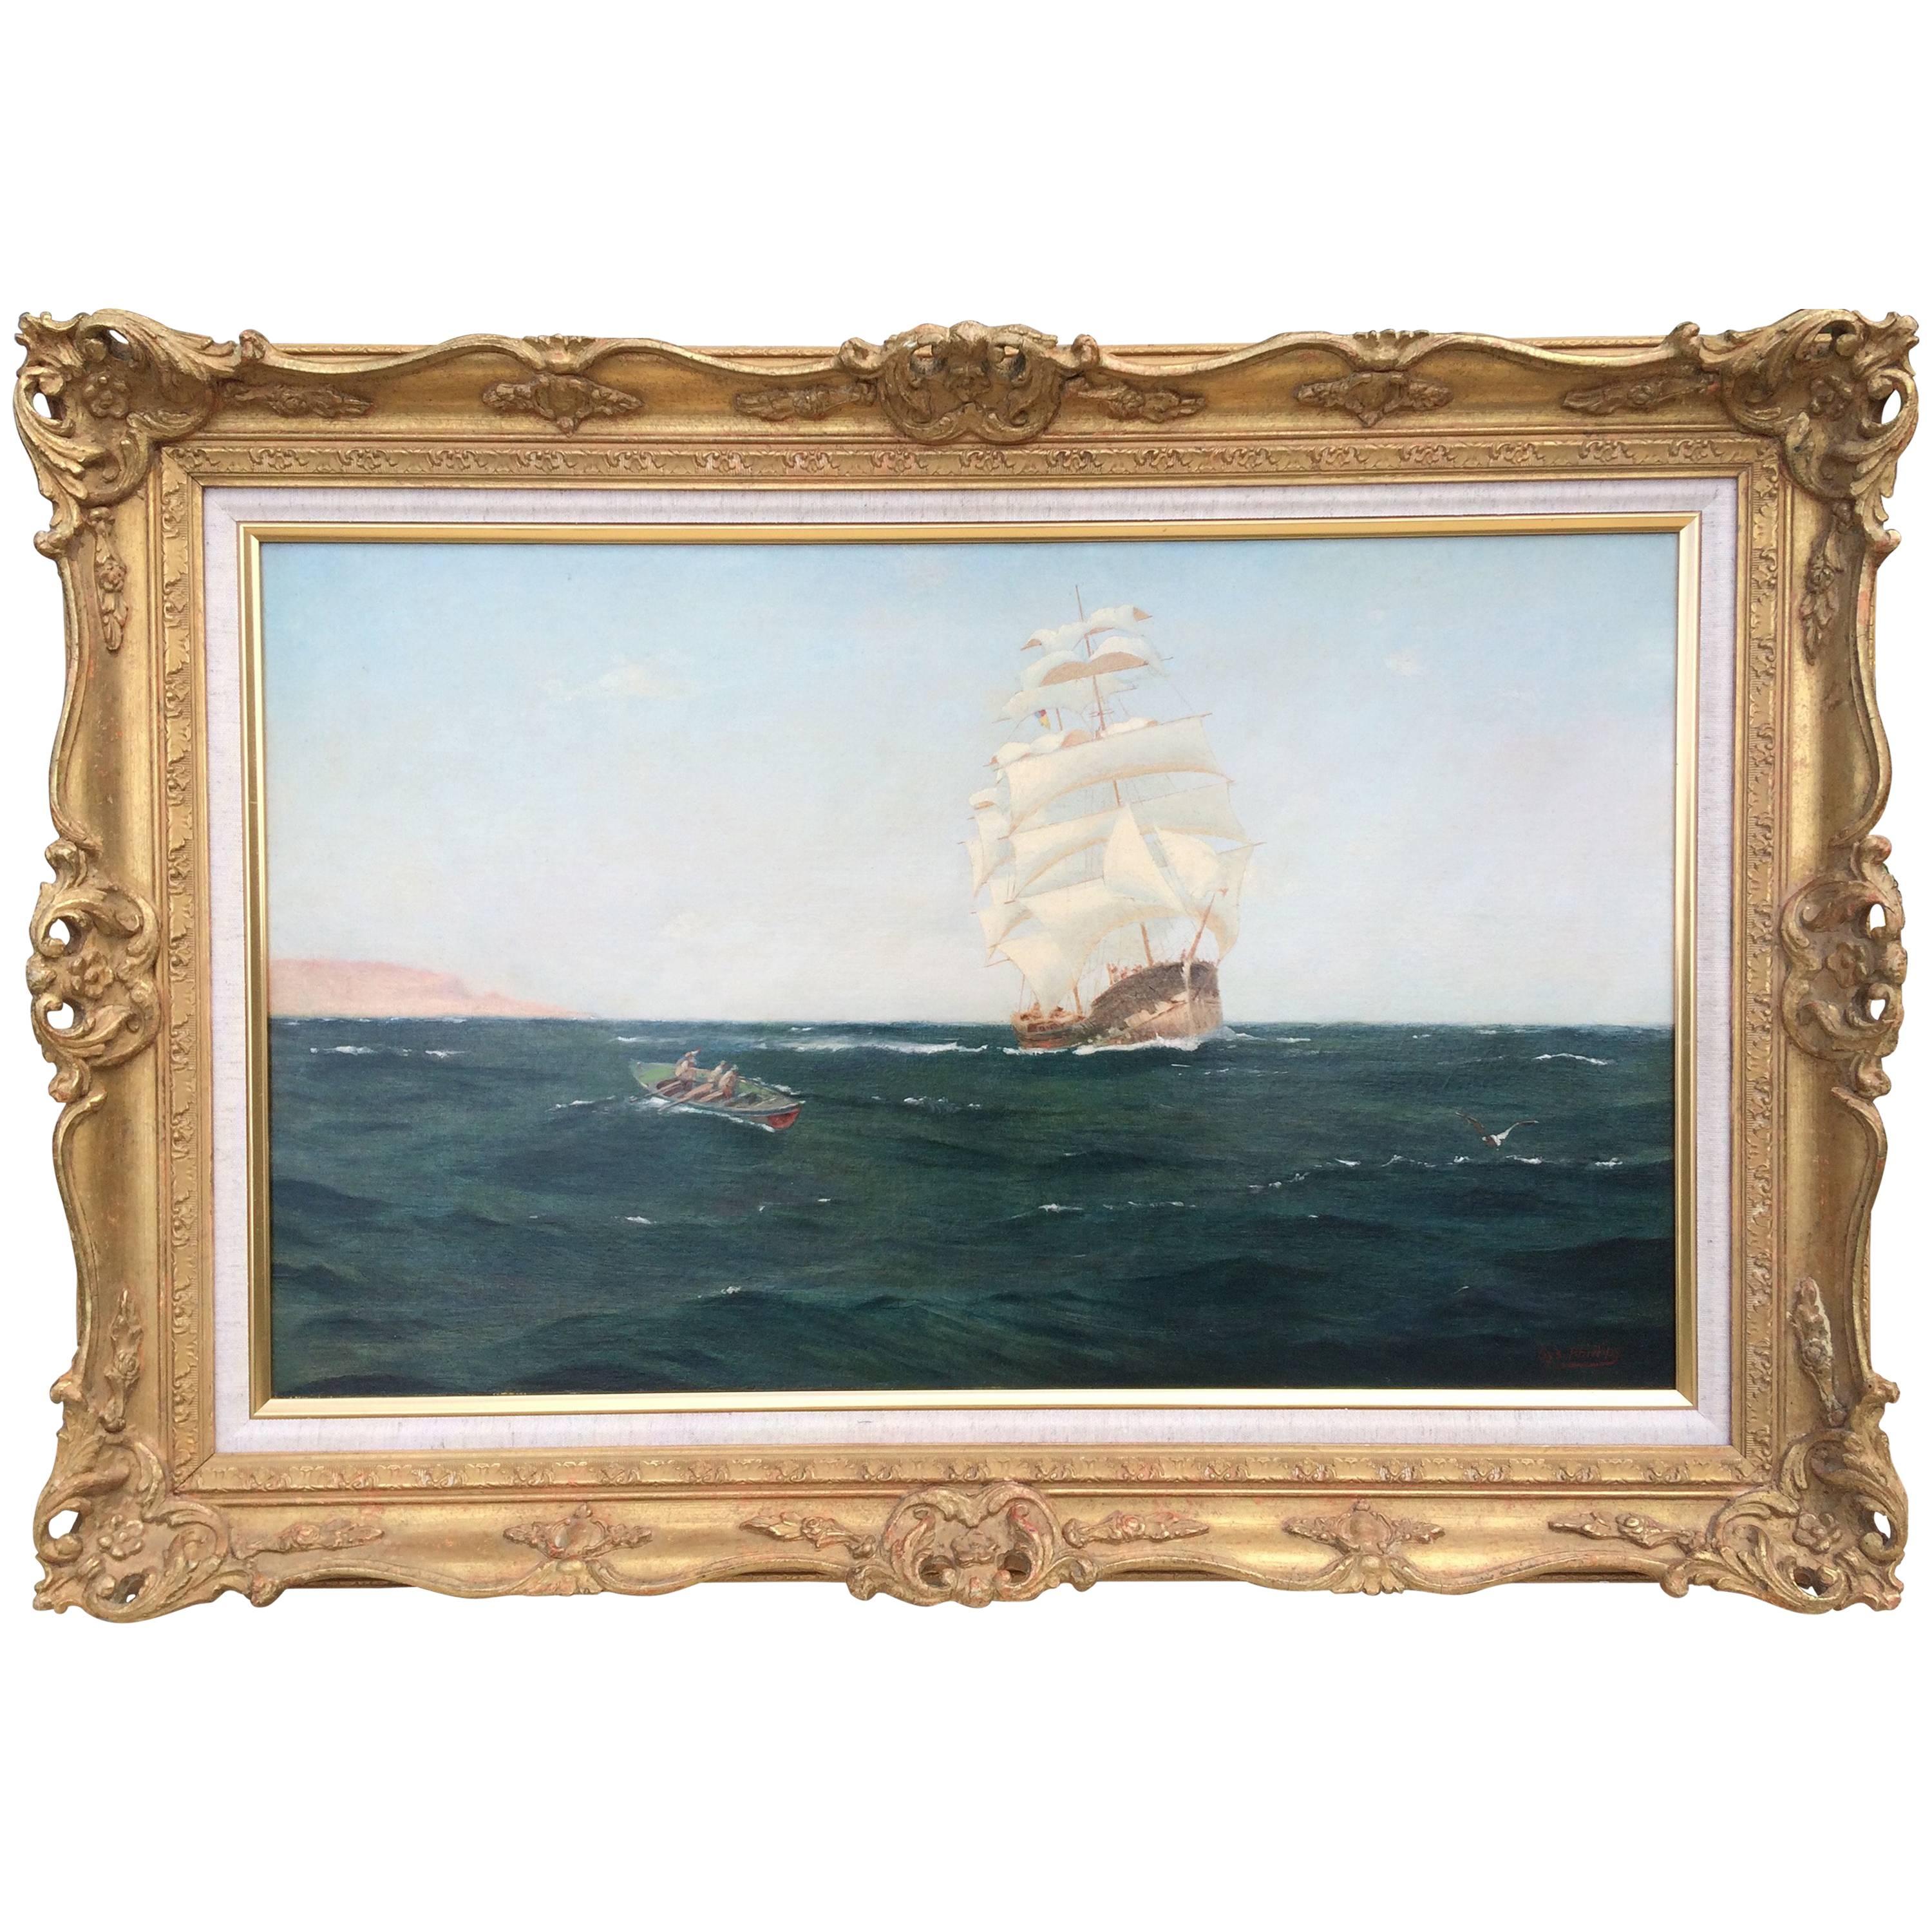 "Going Ashore" by Sydney Phillips, 19th Century British Marine Painting